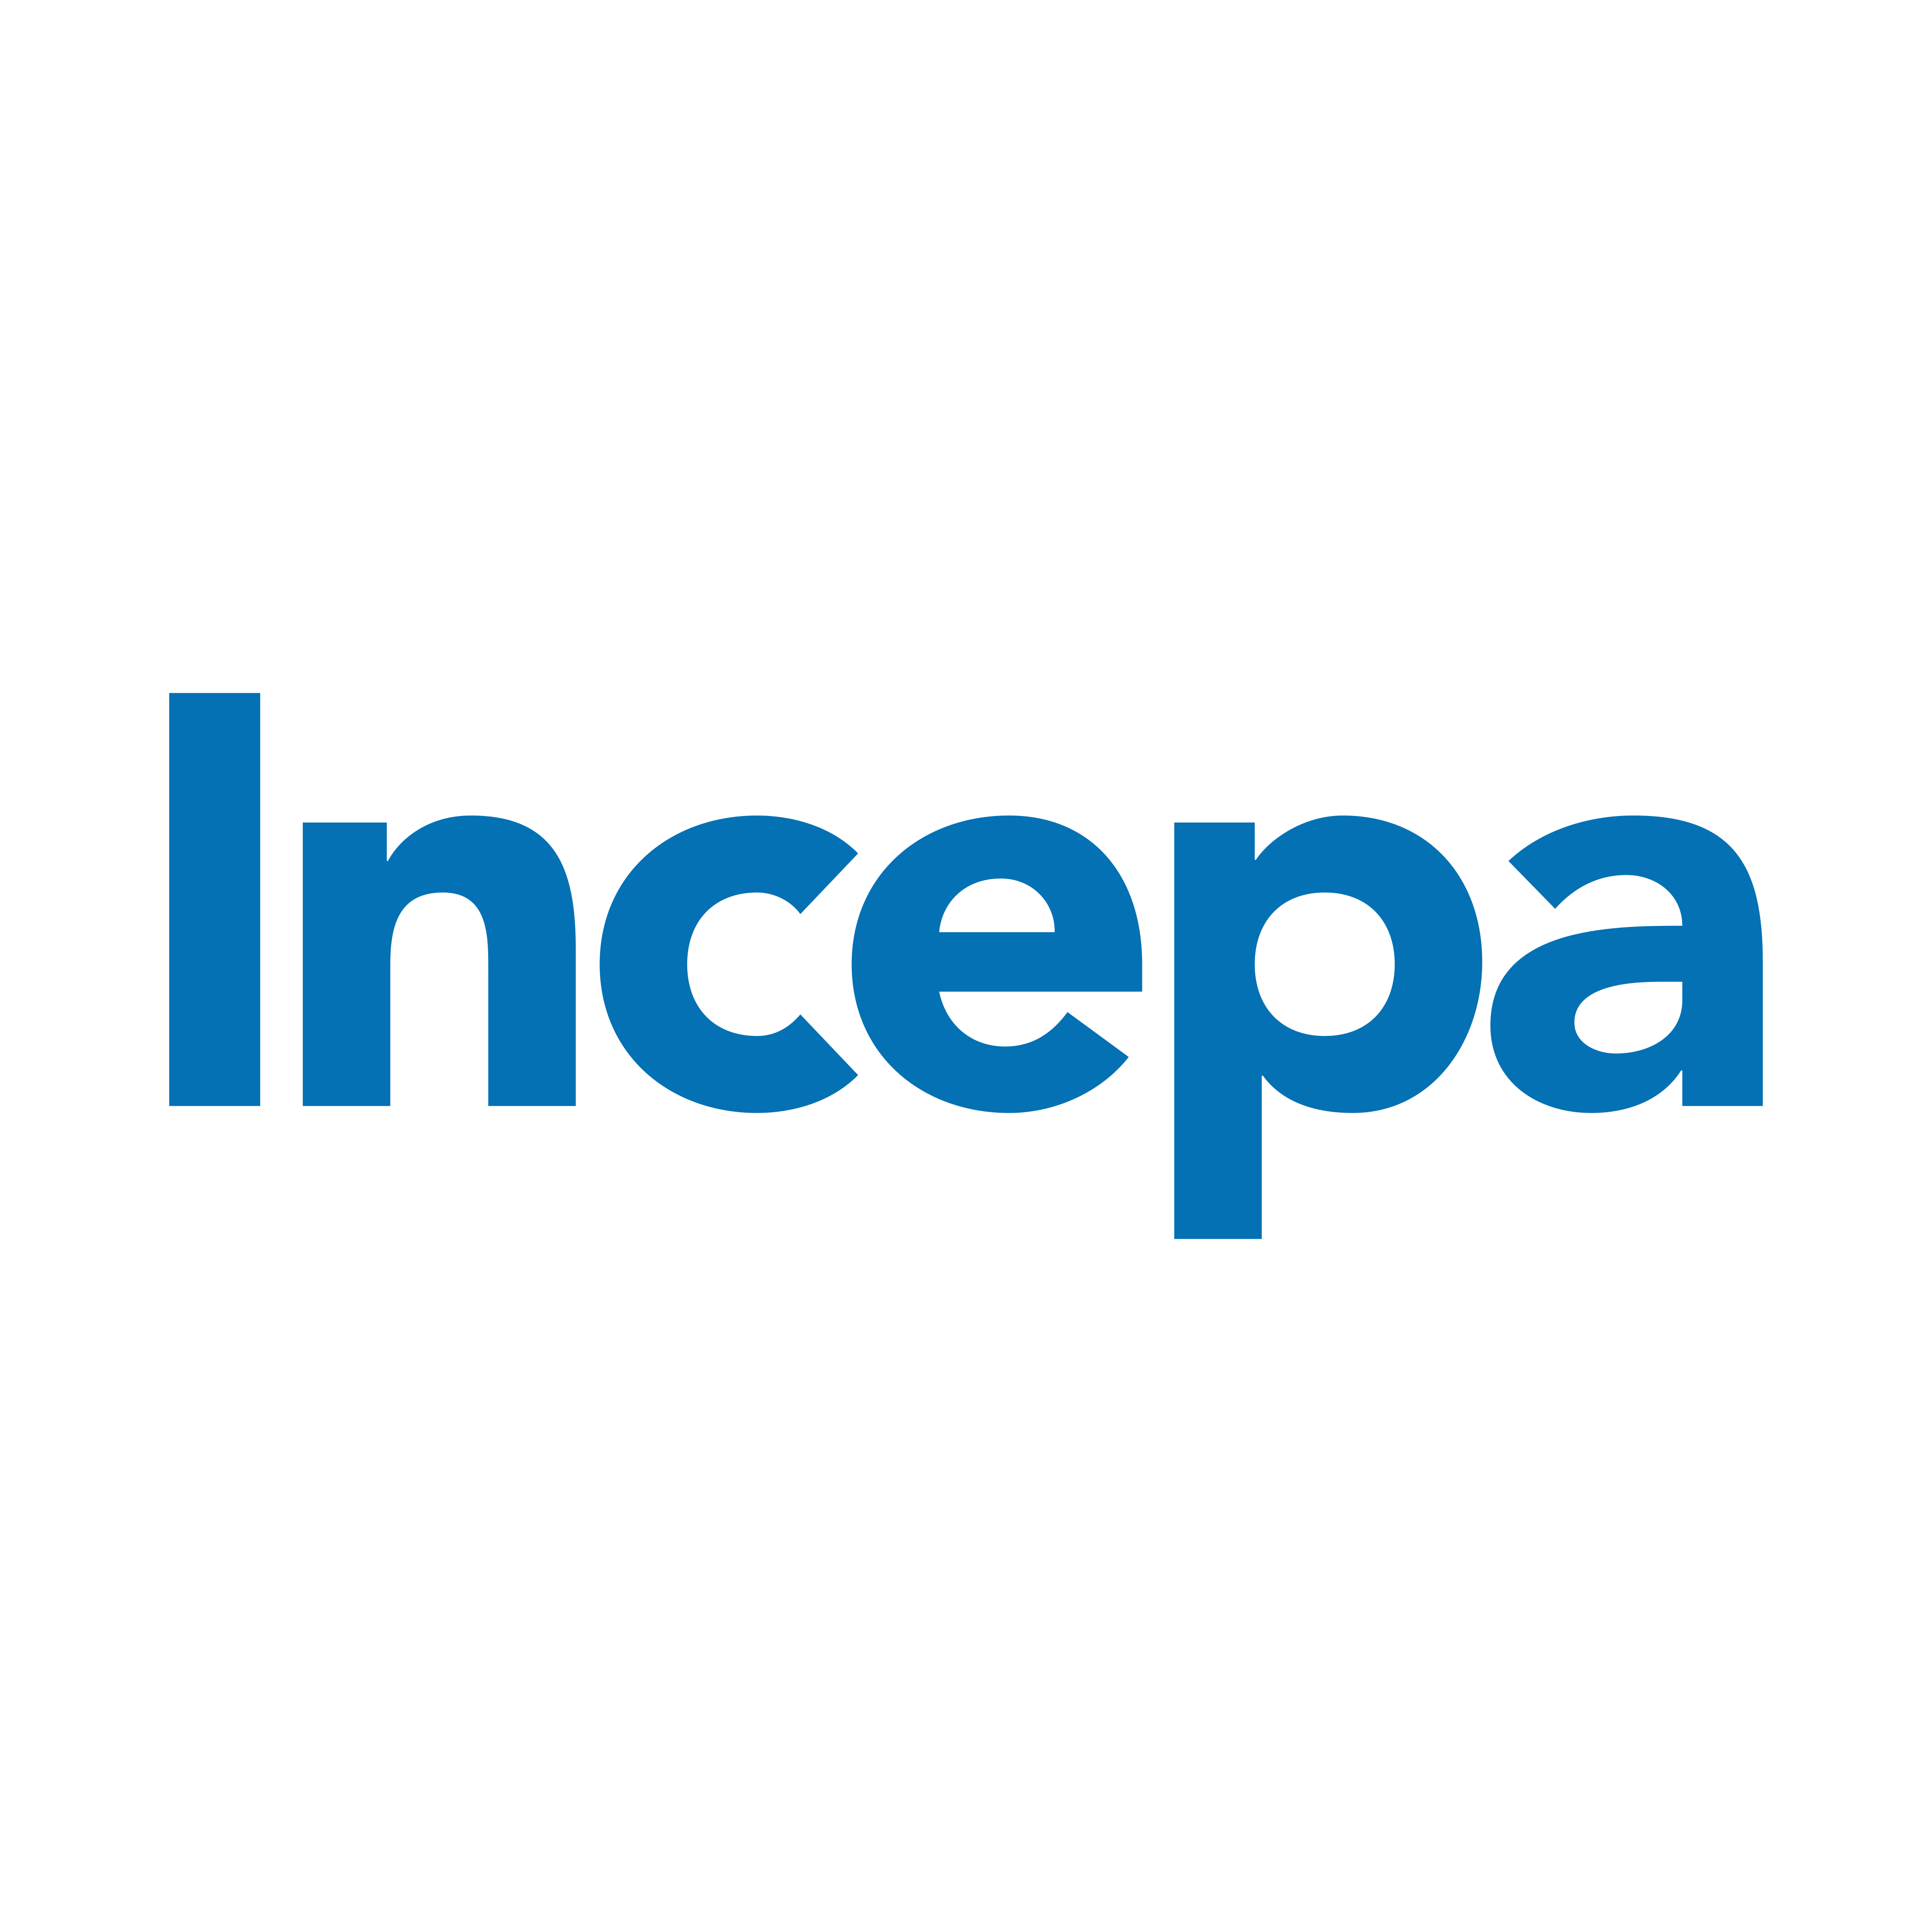 Incepa Logo PNG.